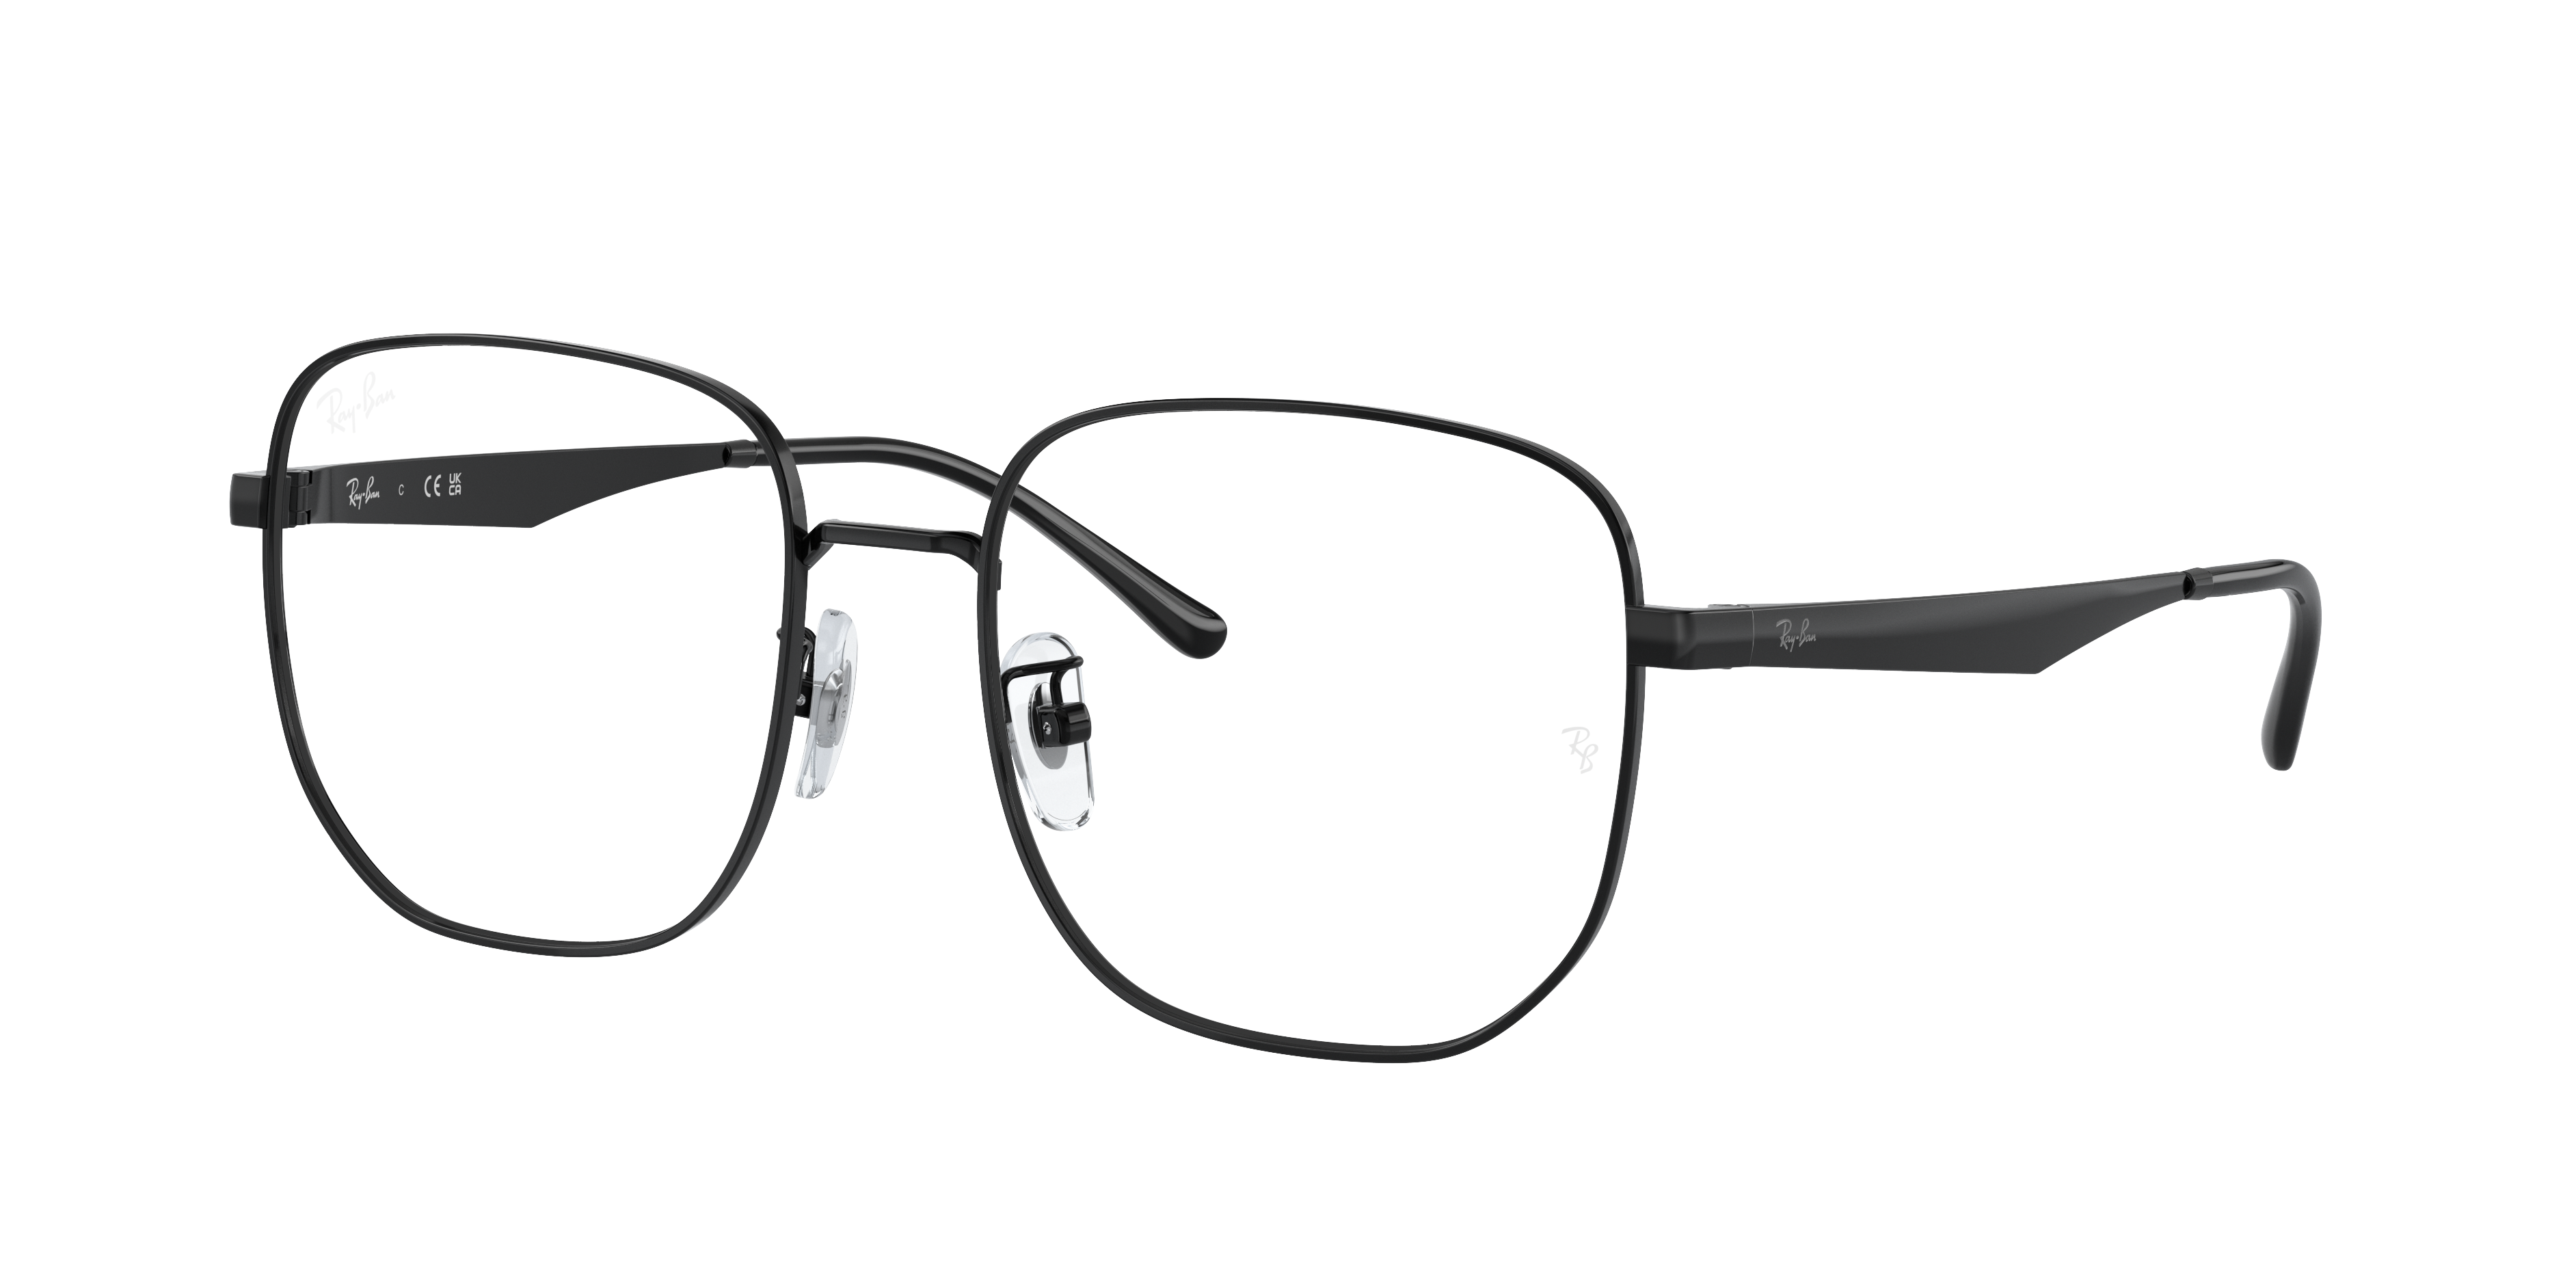 Rb6503 Optics Eyeglasses with Black Frame - RB6503D | Ray-Ban®